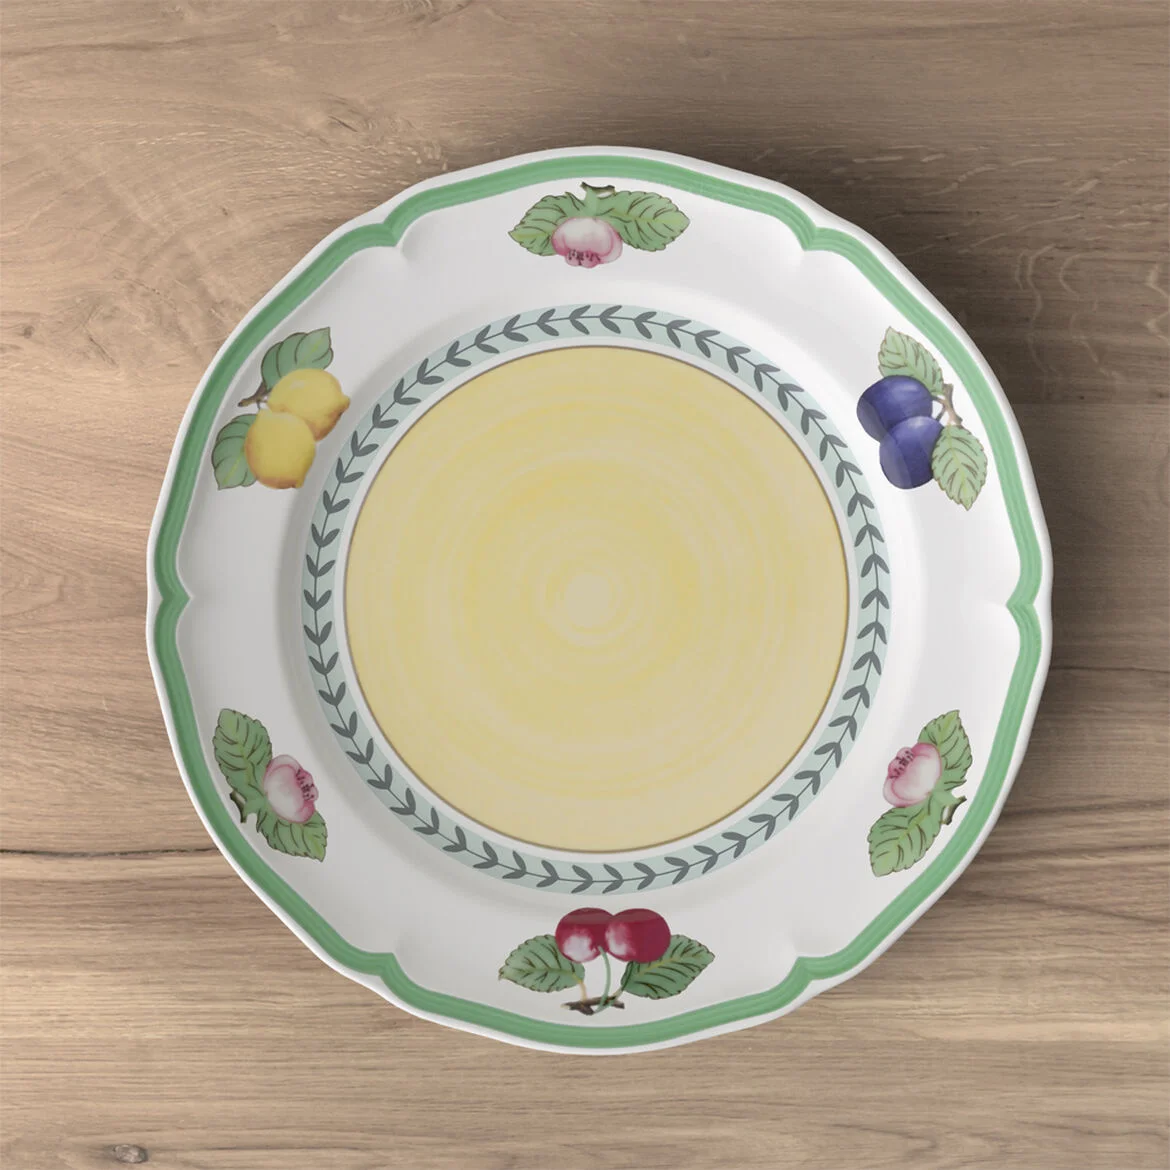 French Garden Fleurence Плоская тарелка 26 см